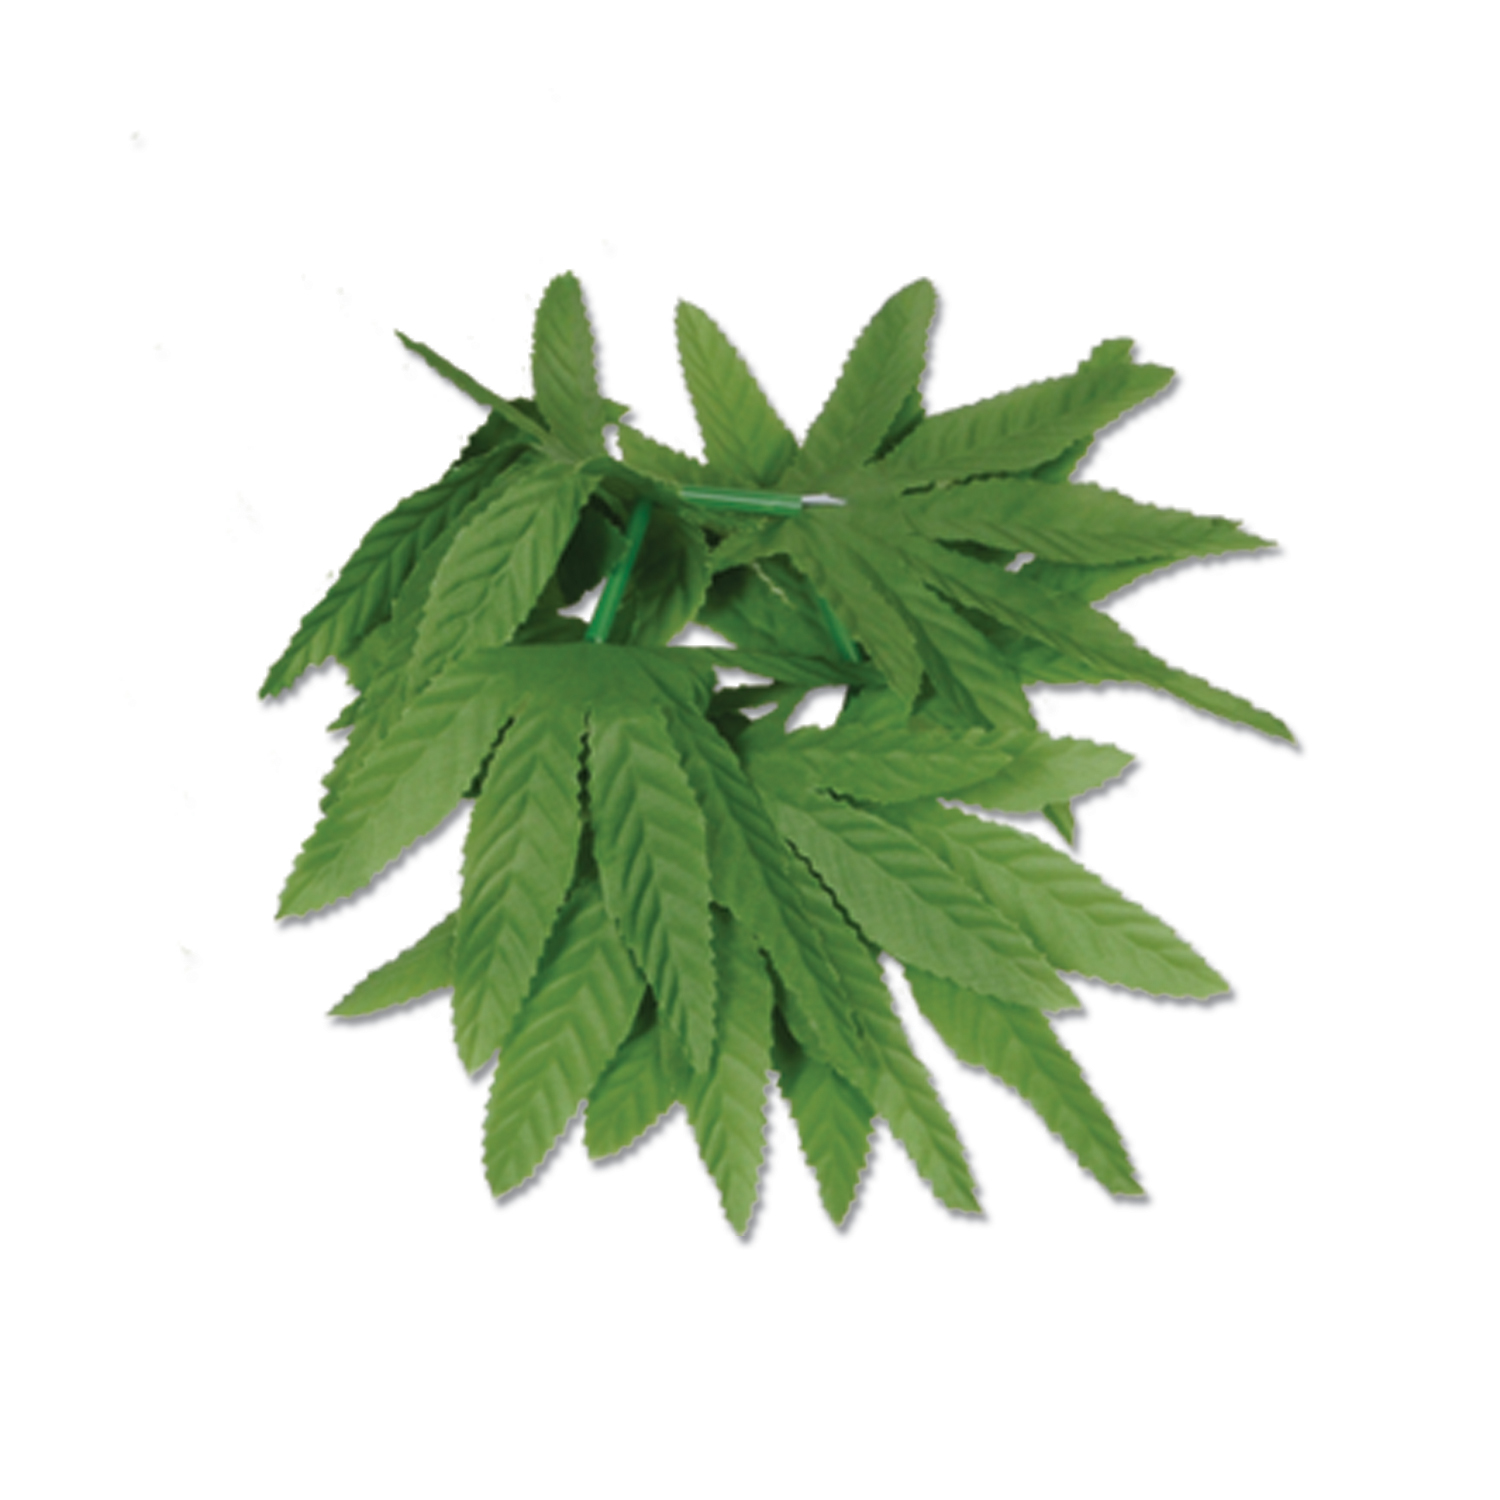 12 Pieces of Tropical Fern Leaf Wristlet/anklet